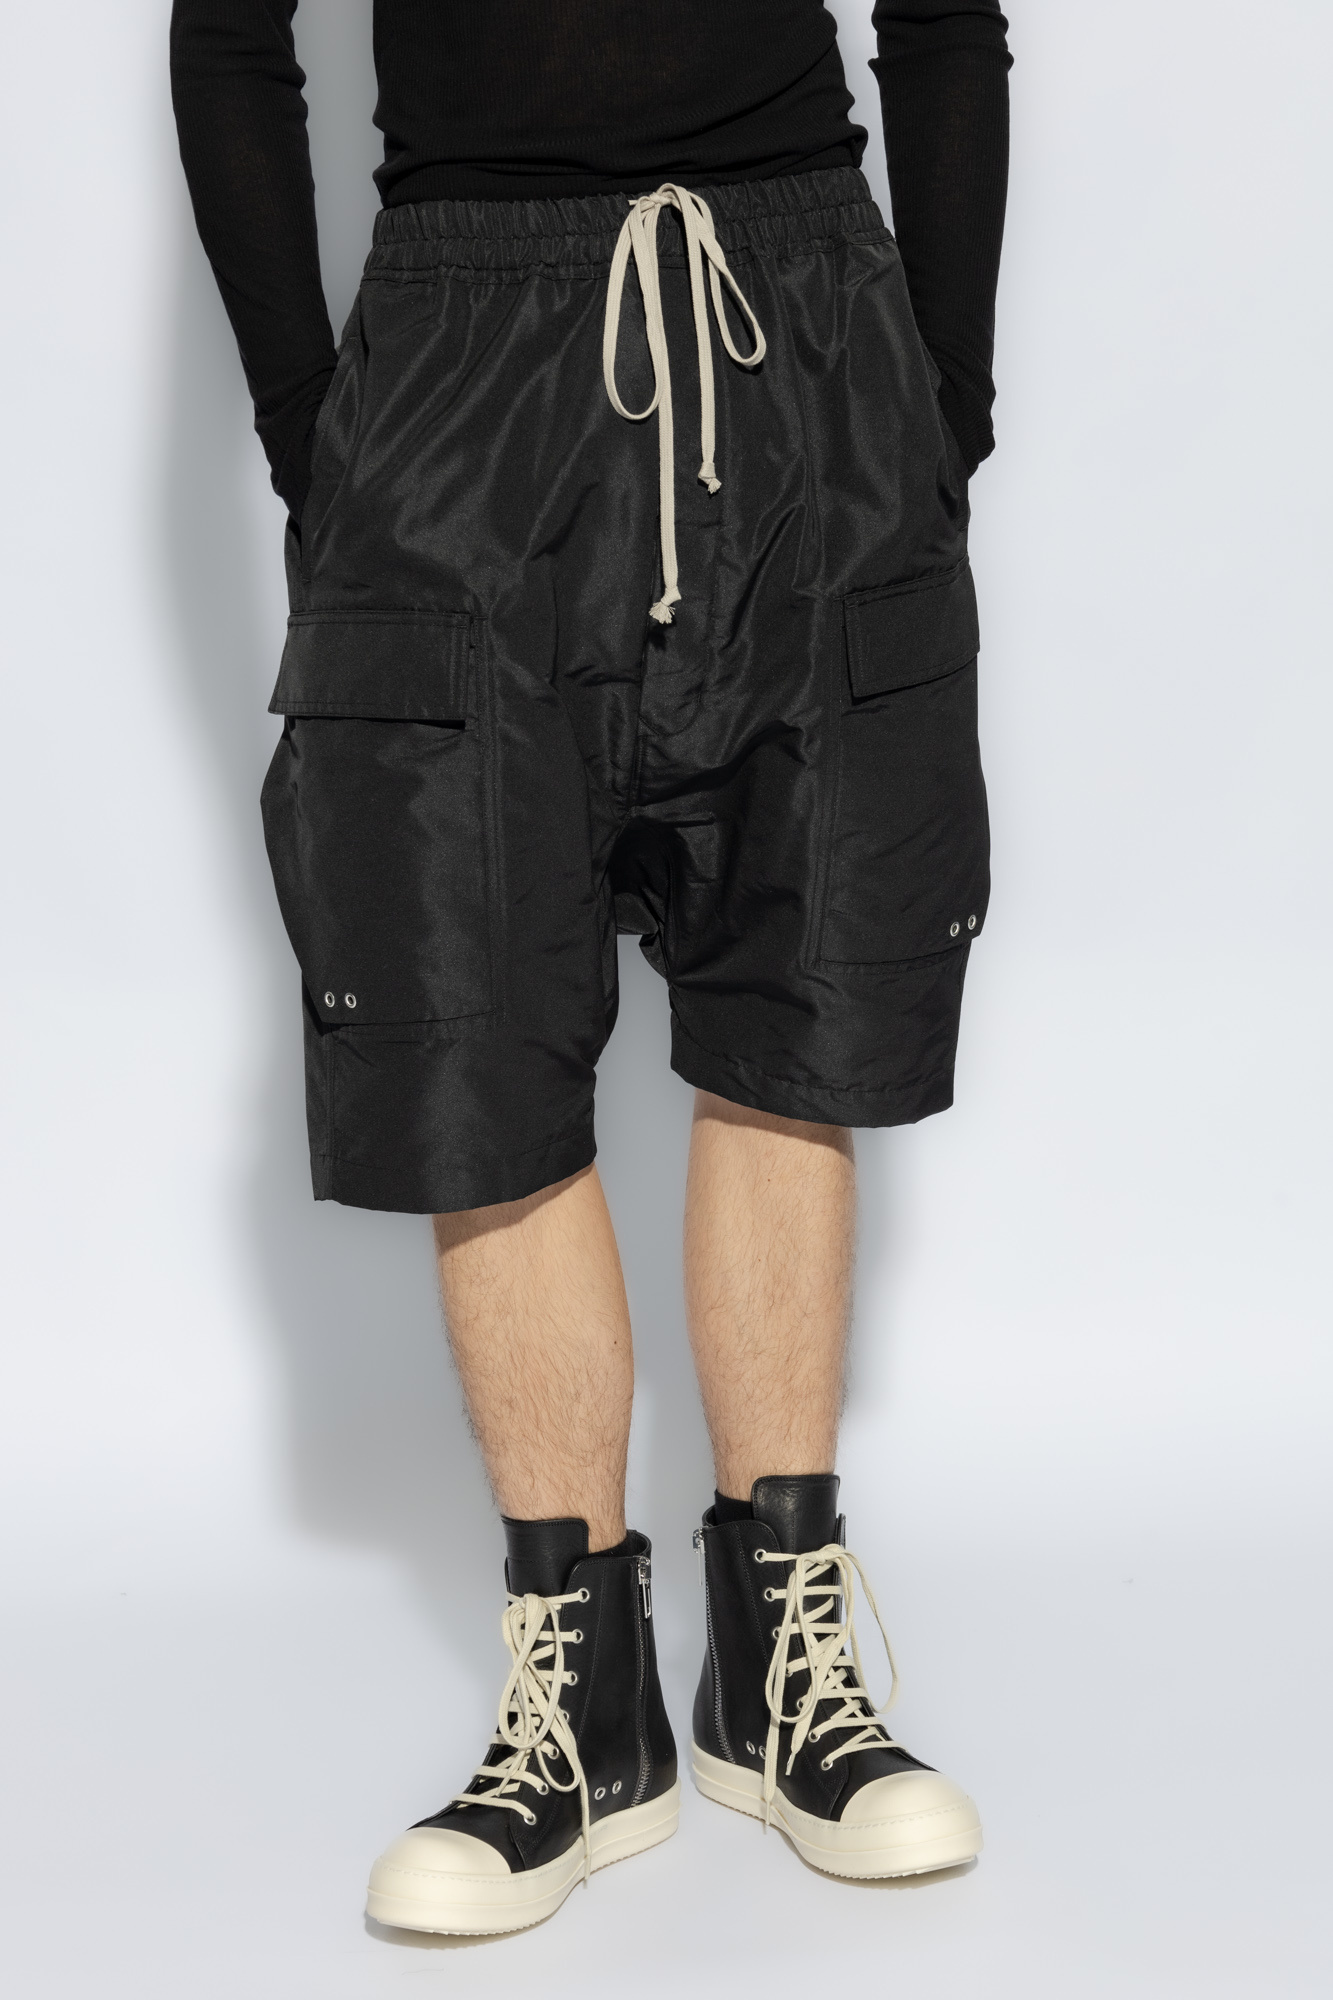 Black 'Pods' shorts with pockets Rick Owens - Vitkac GB